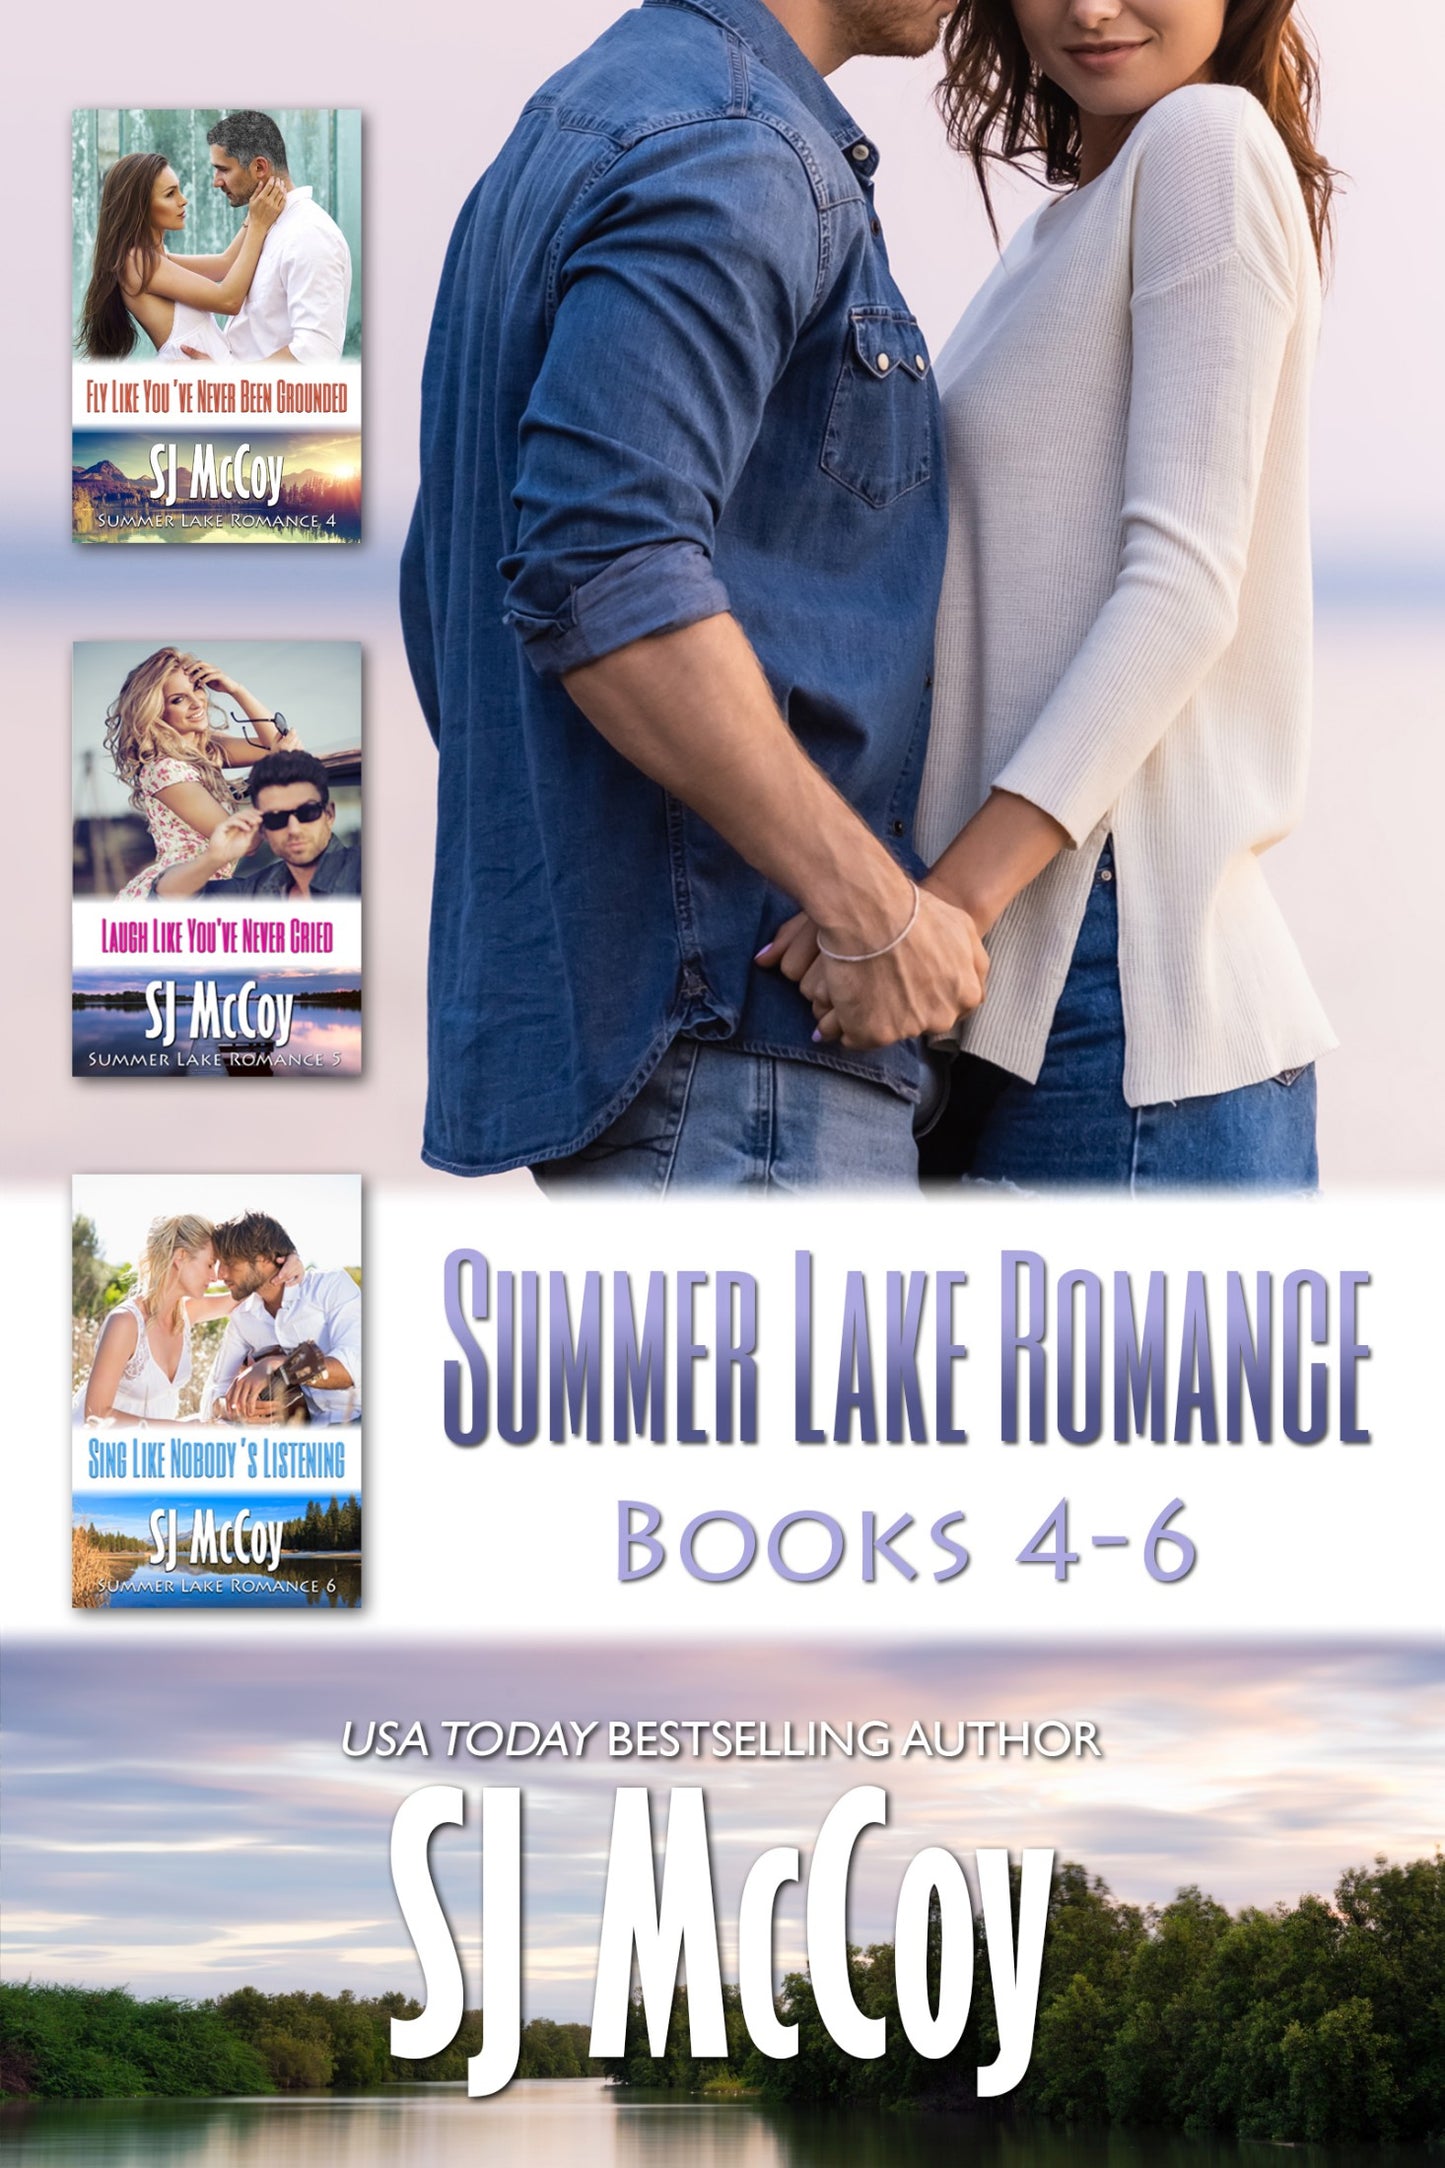 Summer Lake Box Set 2 (Books 4-6) (eBooks)